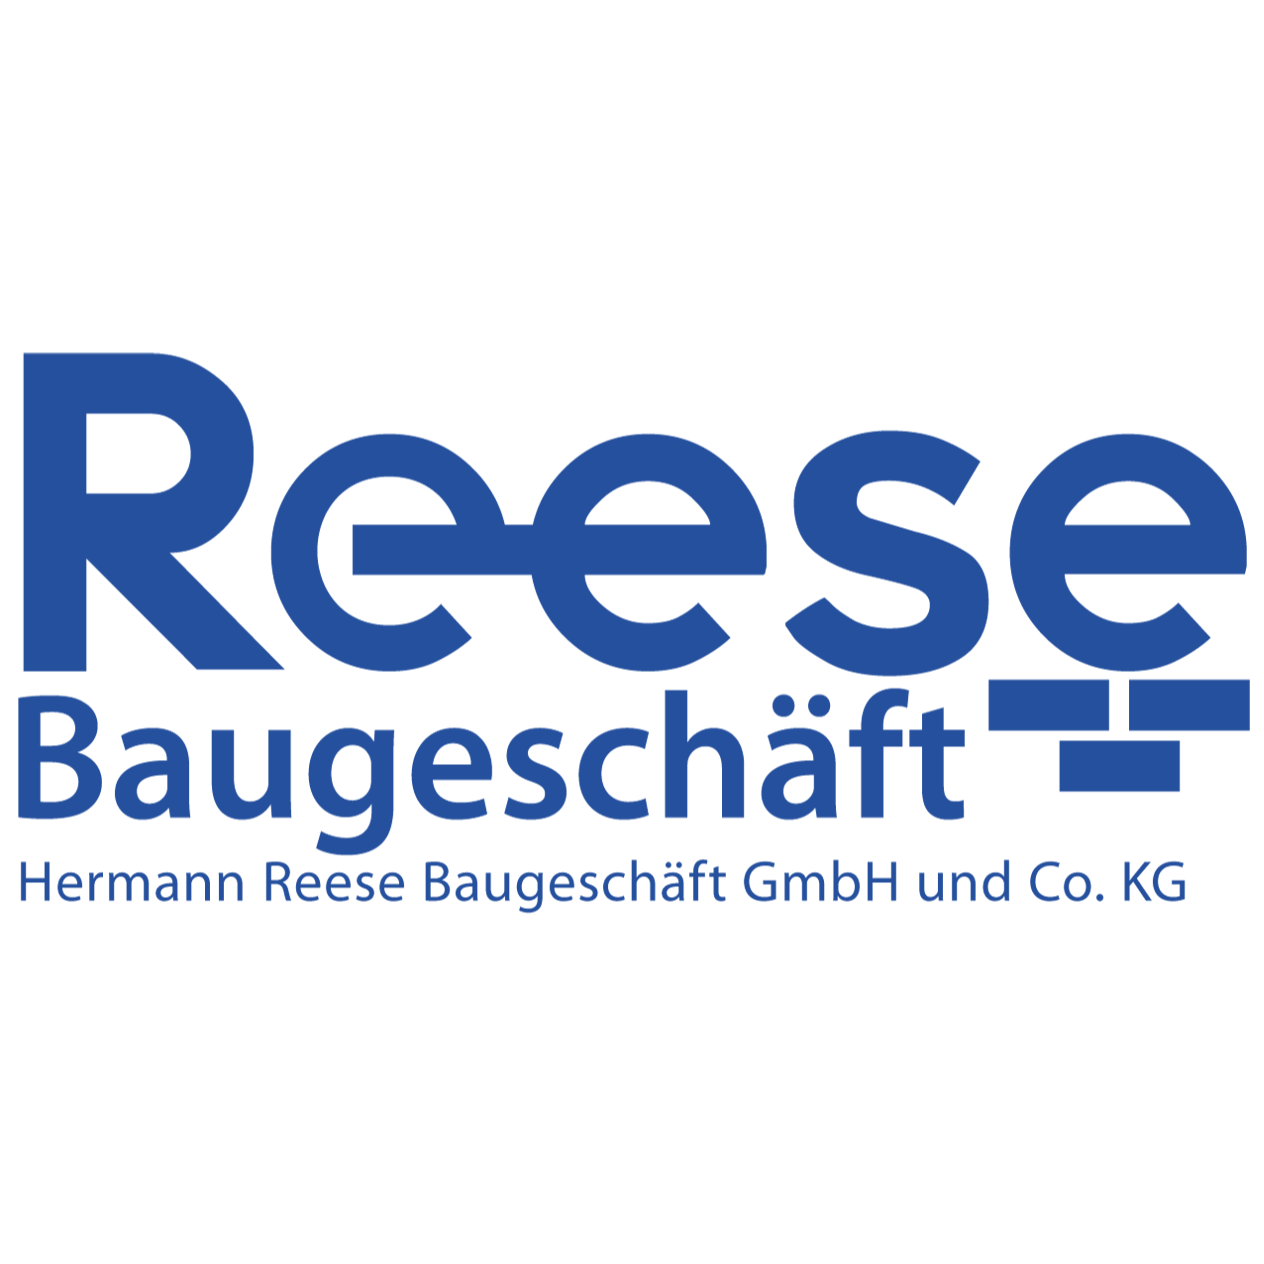 Hermann Reese Baugeschäft GmbH & Co. KG in Bordesholm - Logo